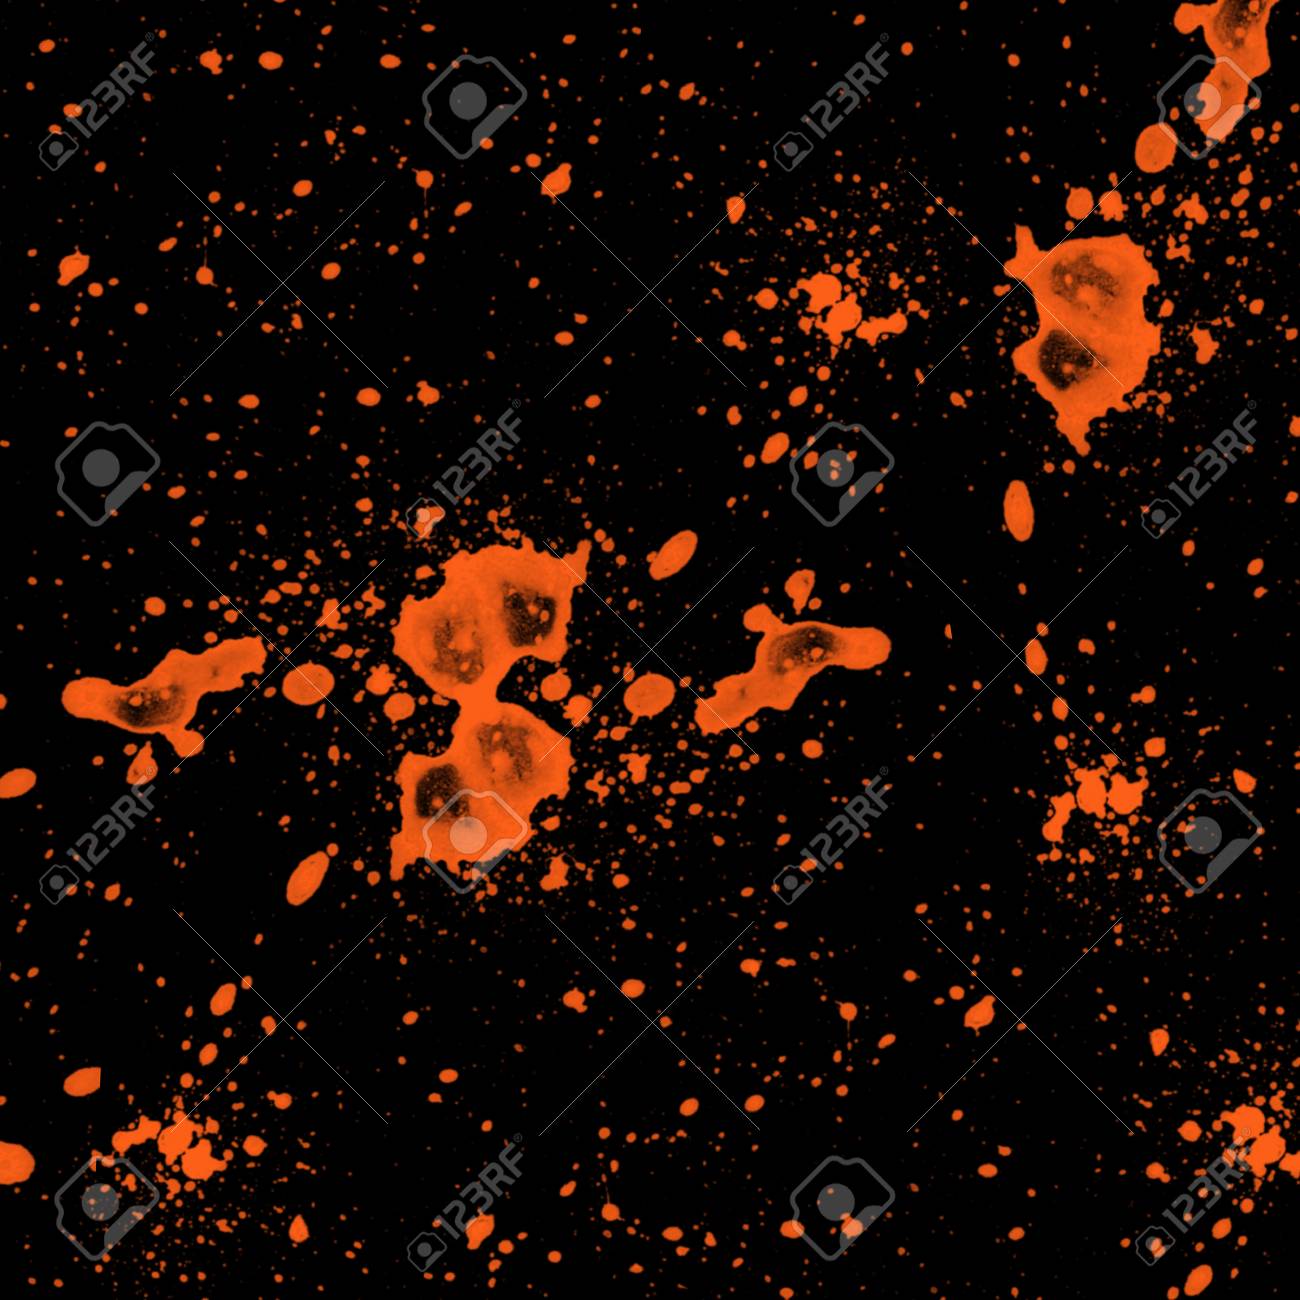 Orange Paint Splash Black Background Stock Photo Picture And